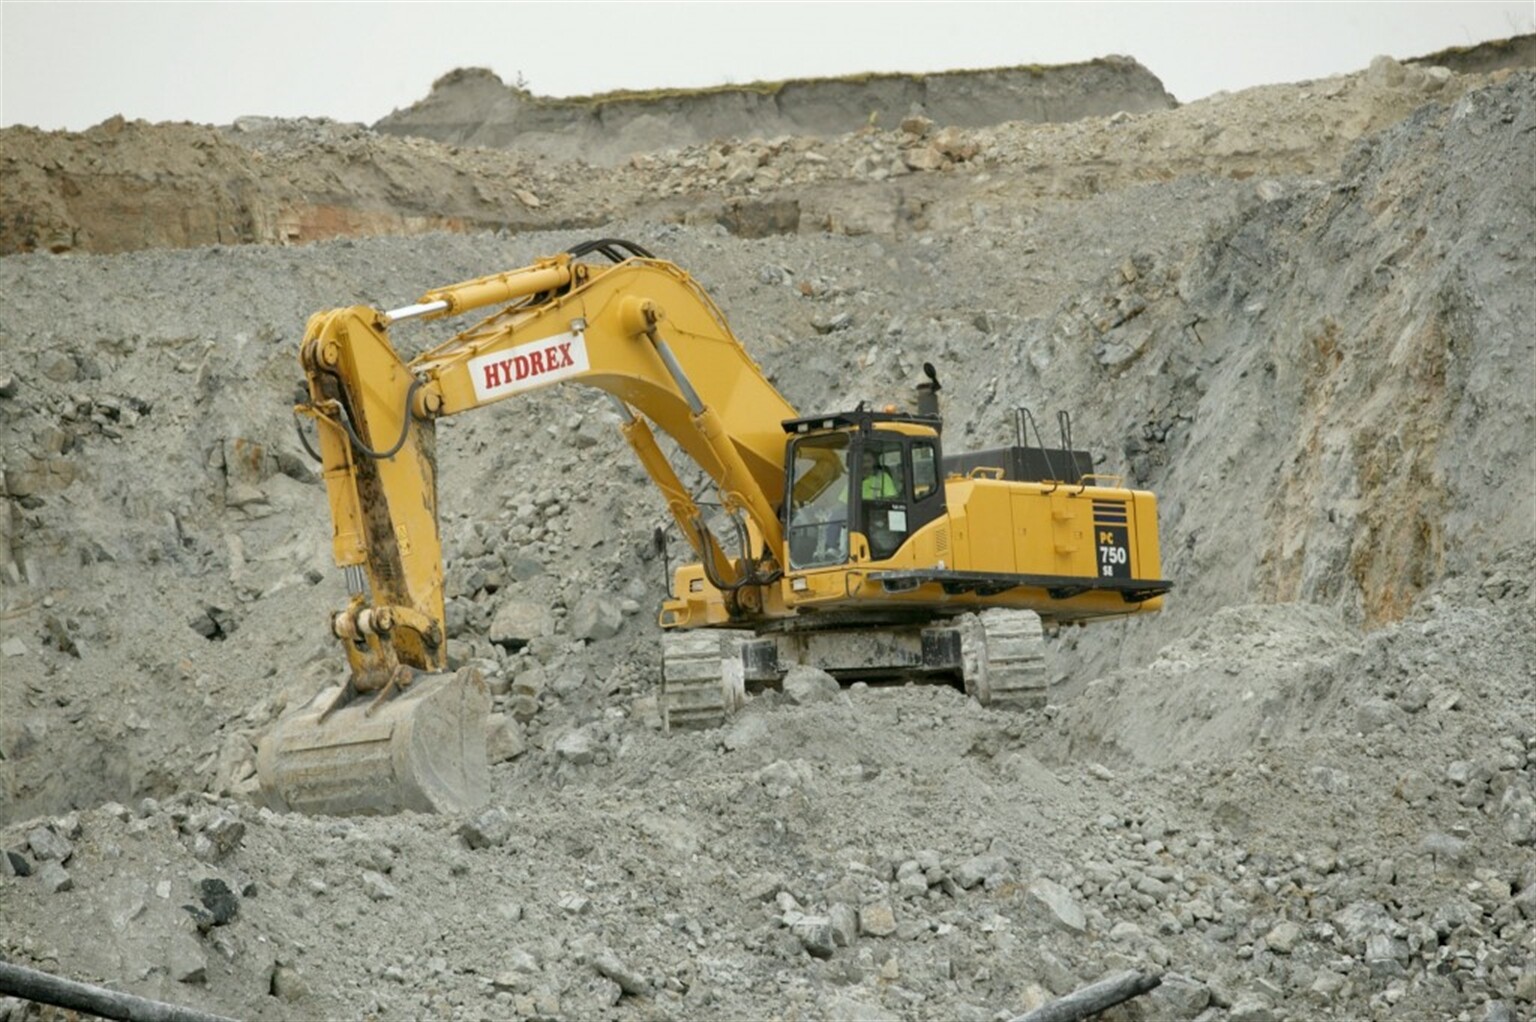 Komatsu in the China clay pits